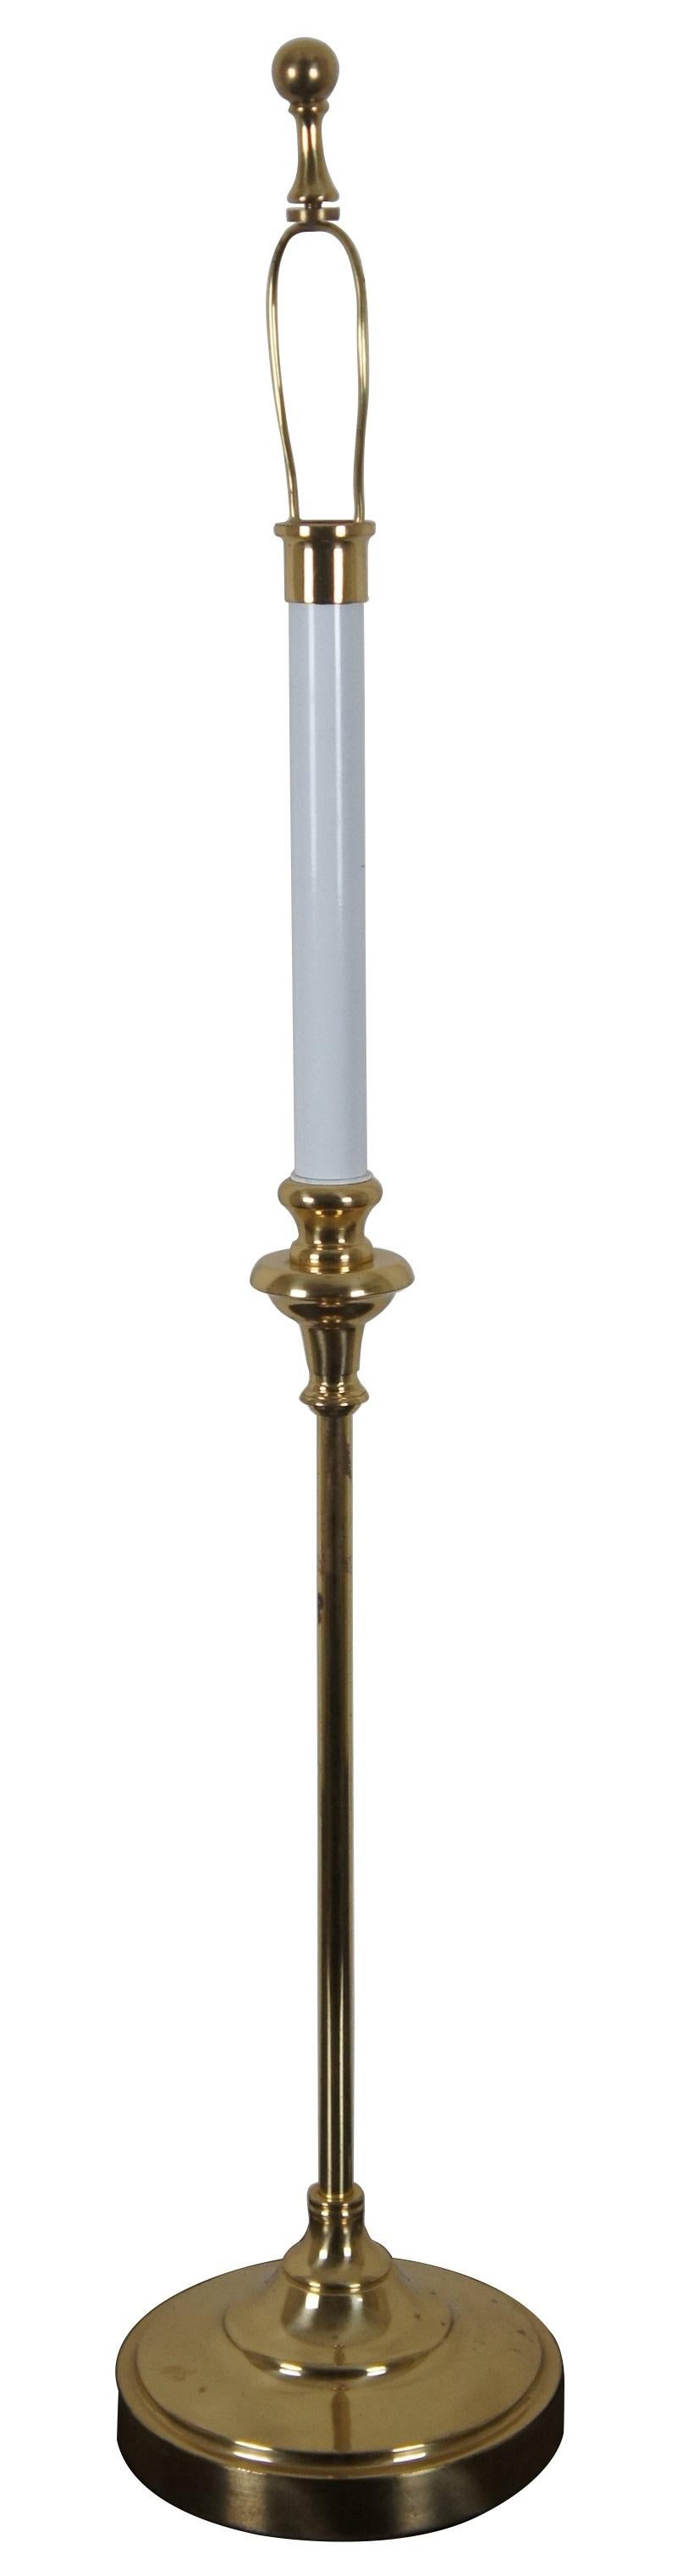 Maitland Smith regency style brass candlestick table lamp.
  